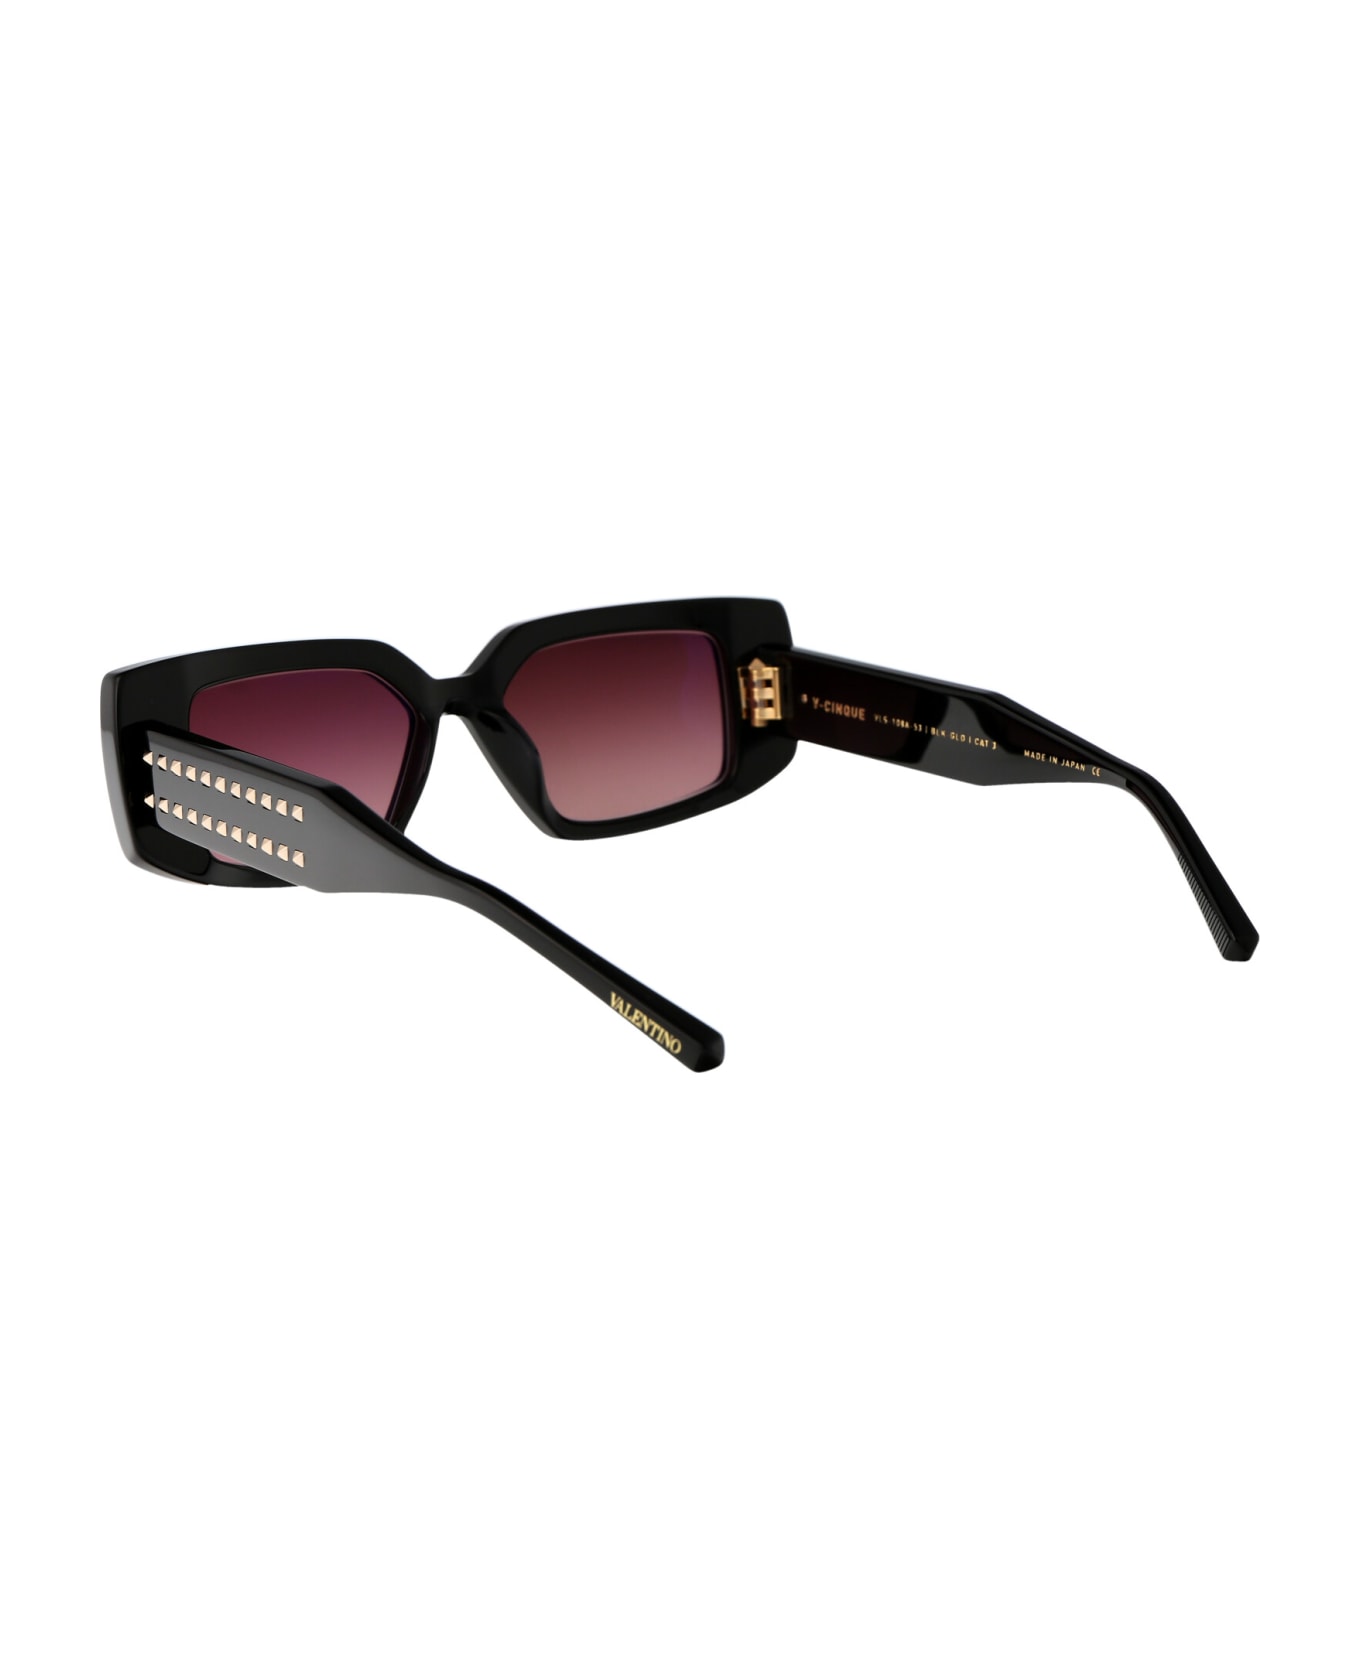 Valentino Eyewear V - Cinque Sunglasses - 108A BLK - GLD サングラス